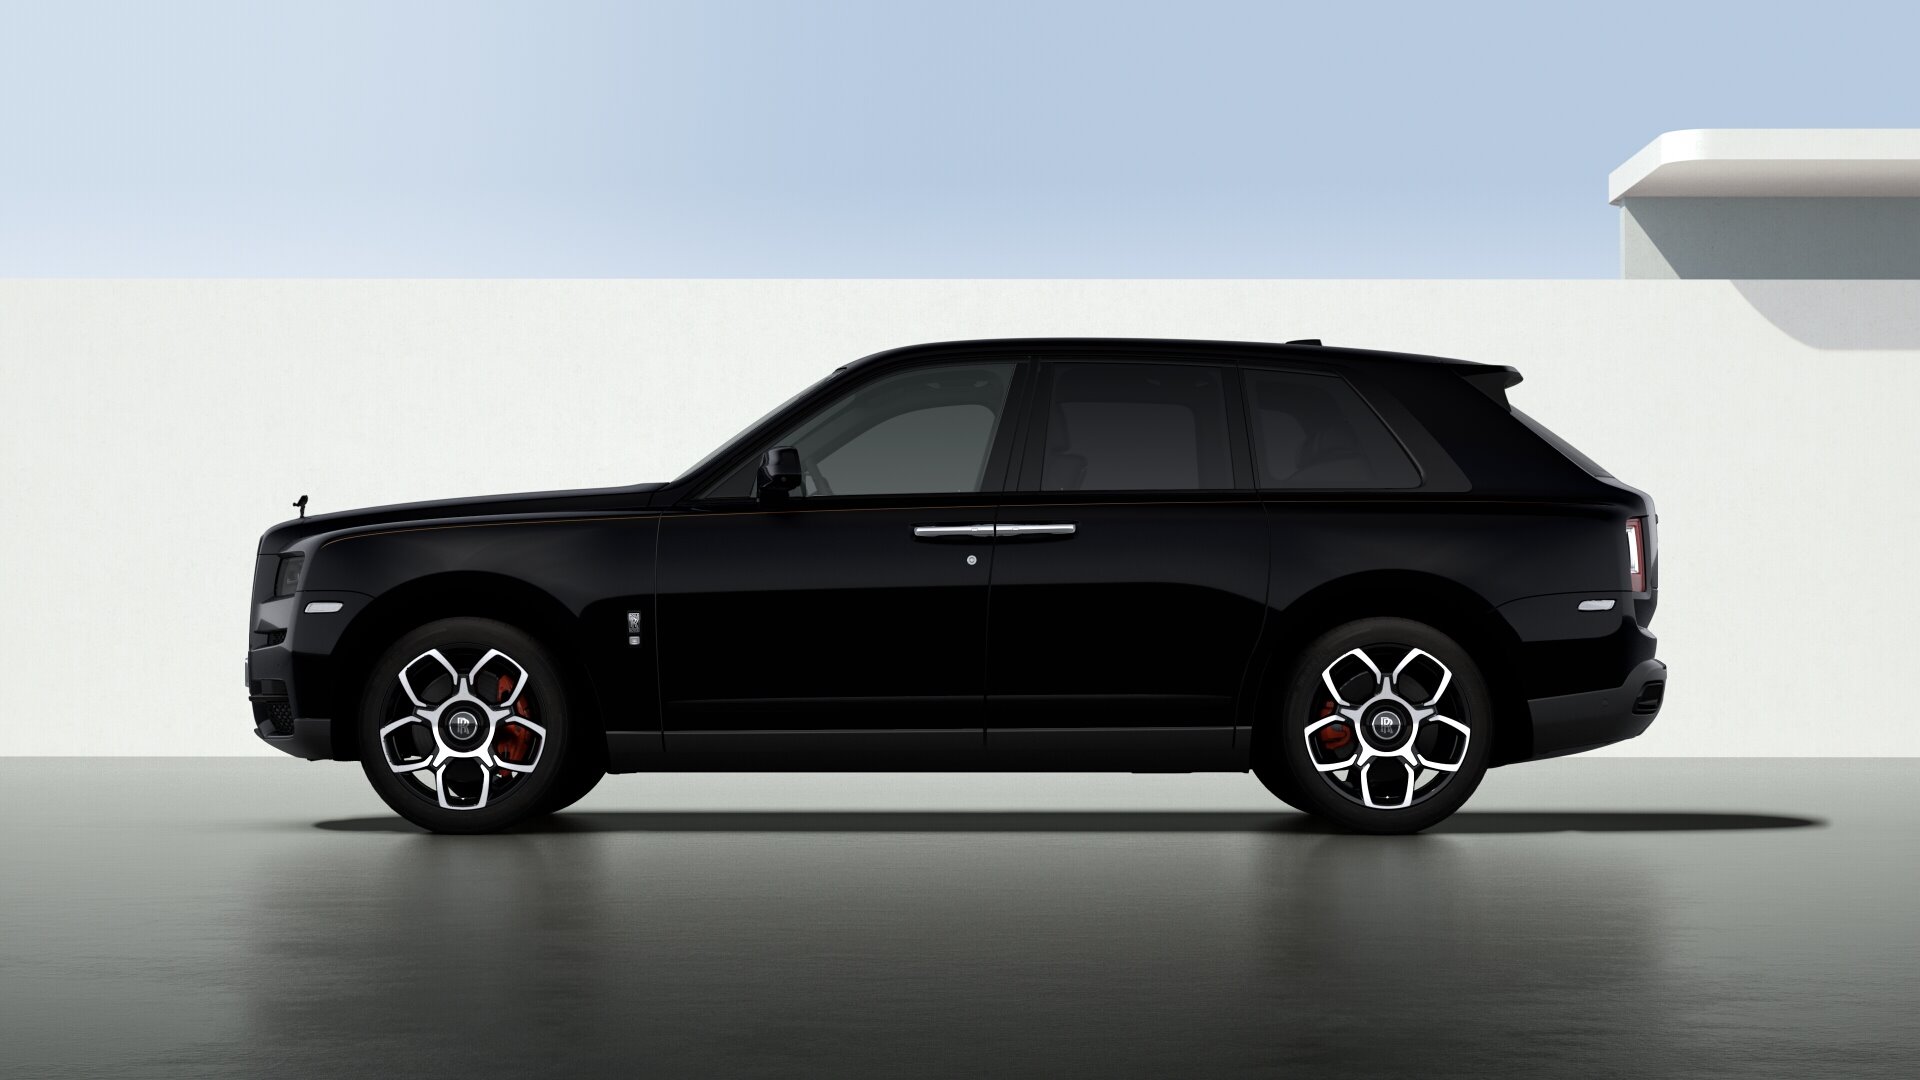 New 2021 Rolls-Royce Cullinan Black Badge For Sale ()